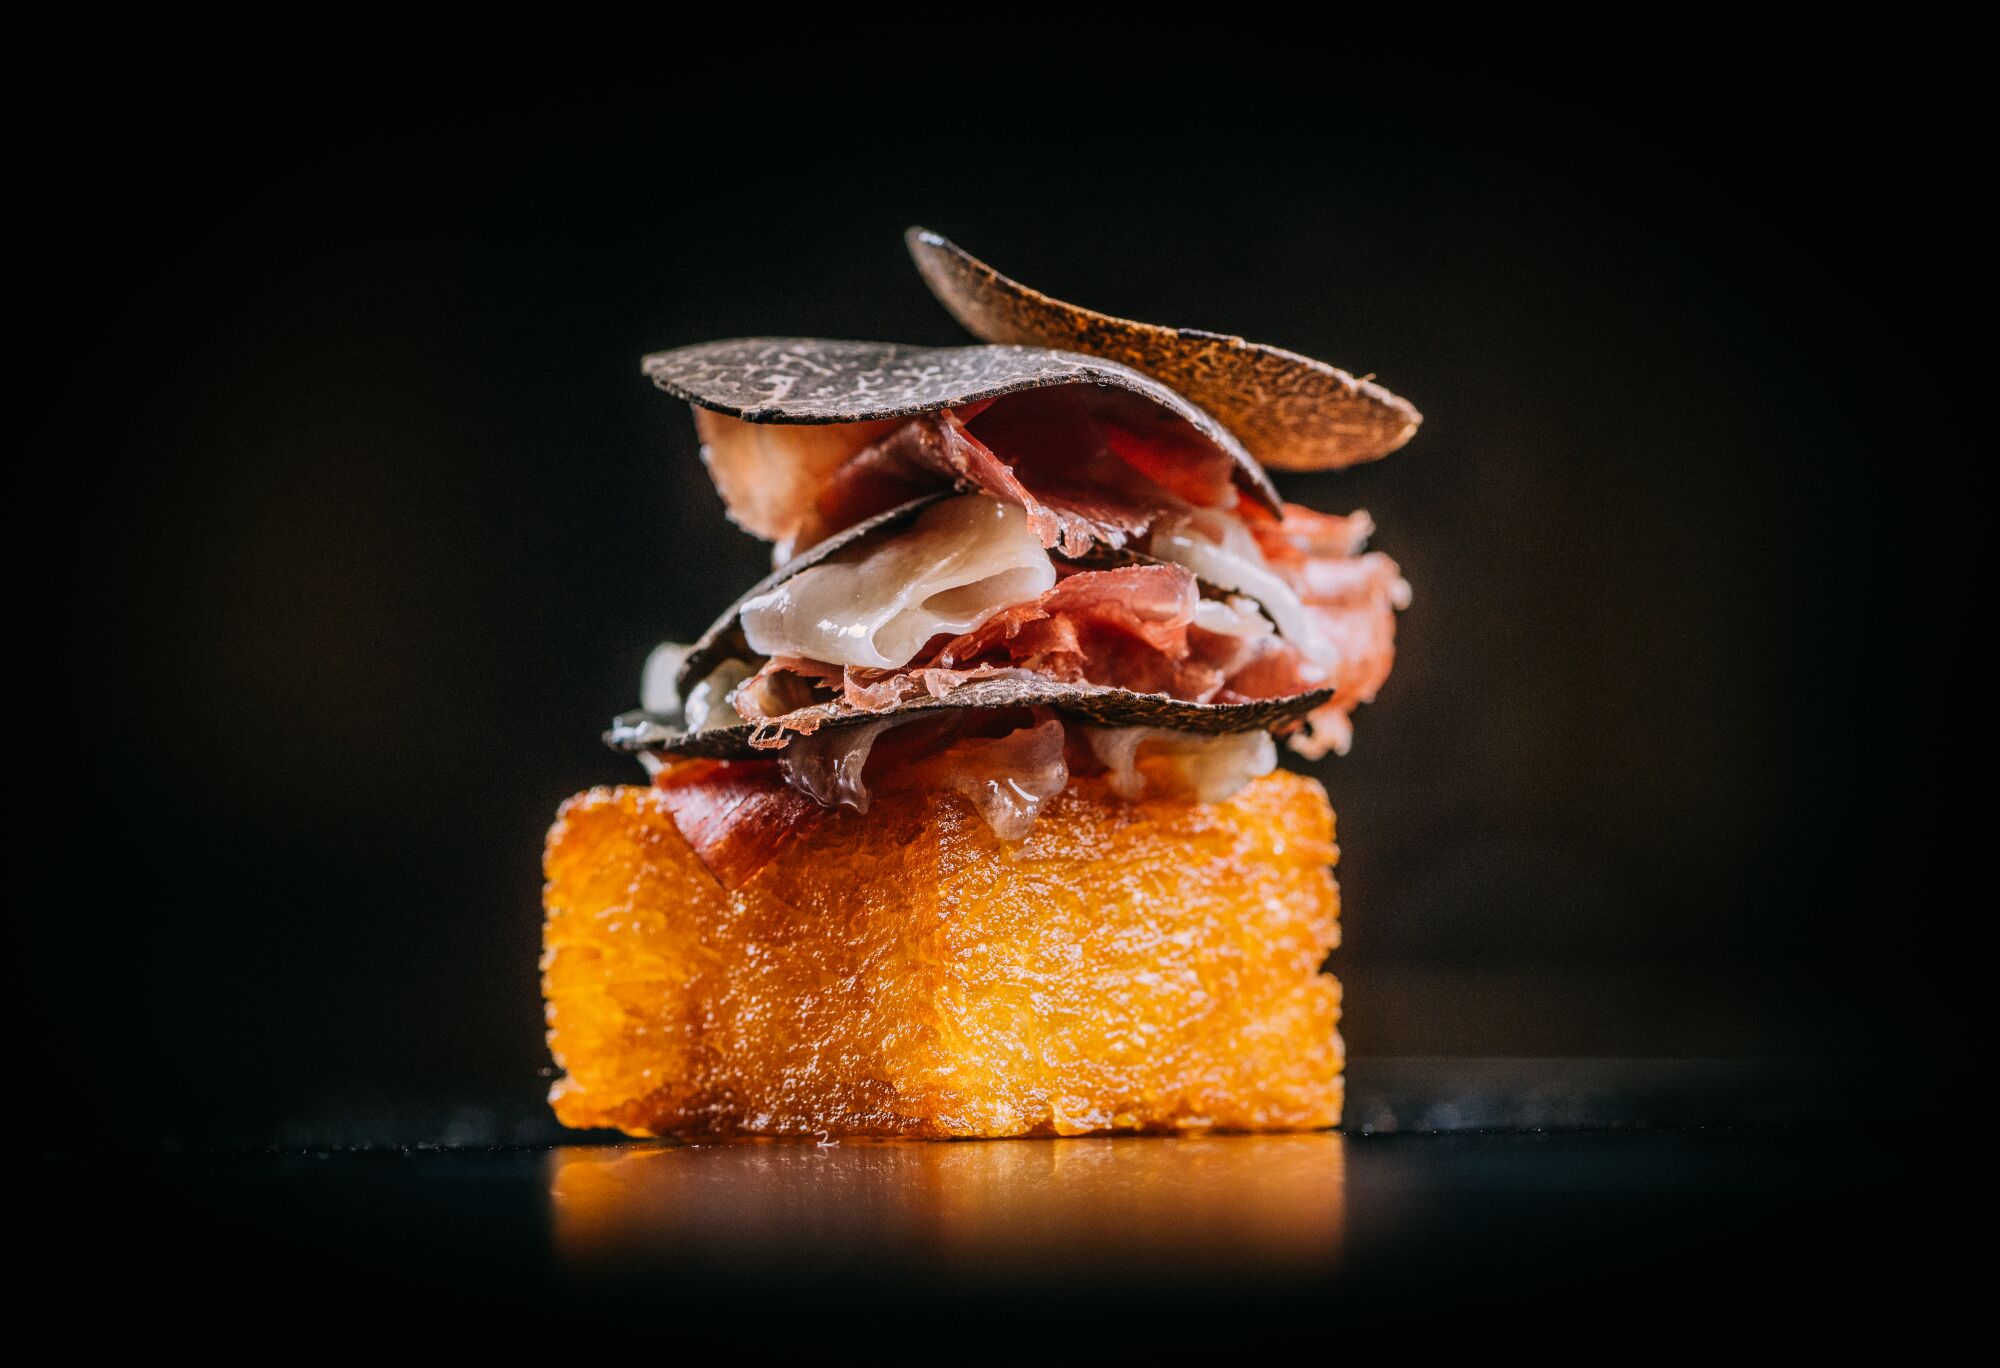 A finished shot by Eric Wolfinger shows a bite of crispy potato, Iberian ham and black truffle at Addison restaurant.